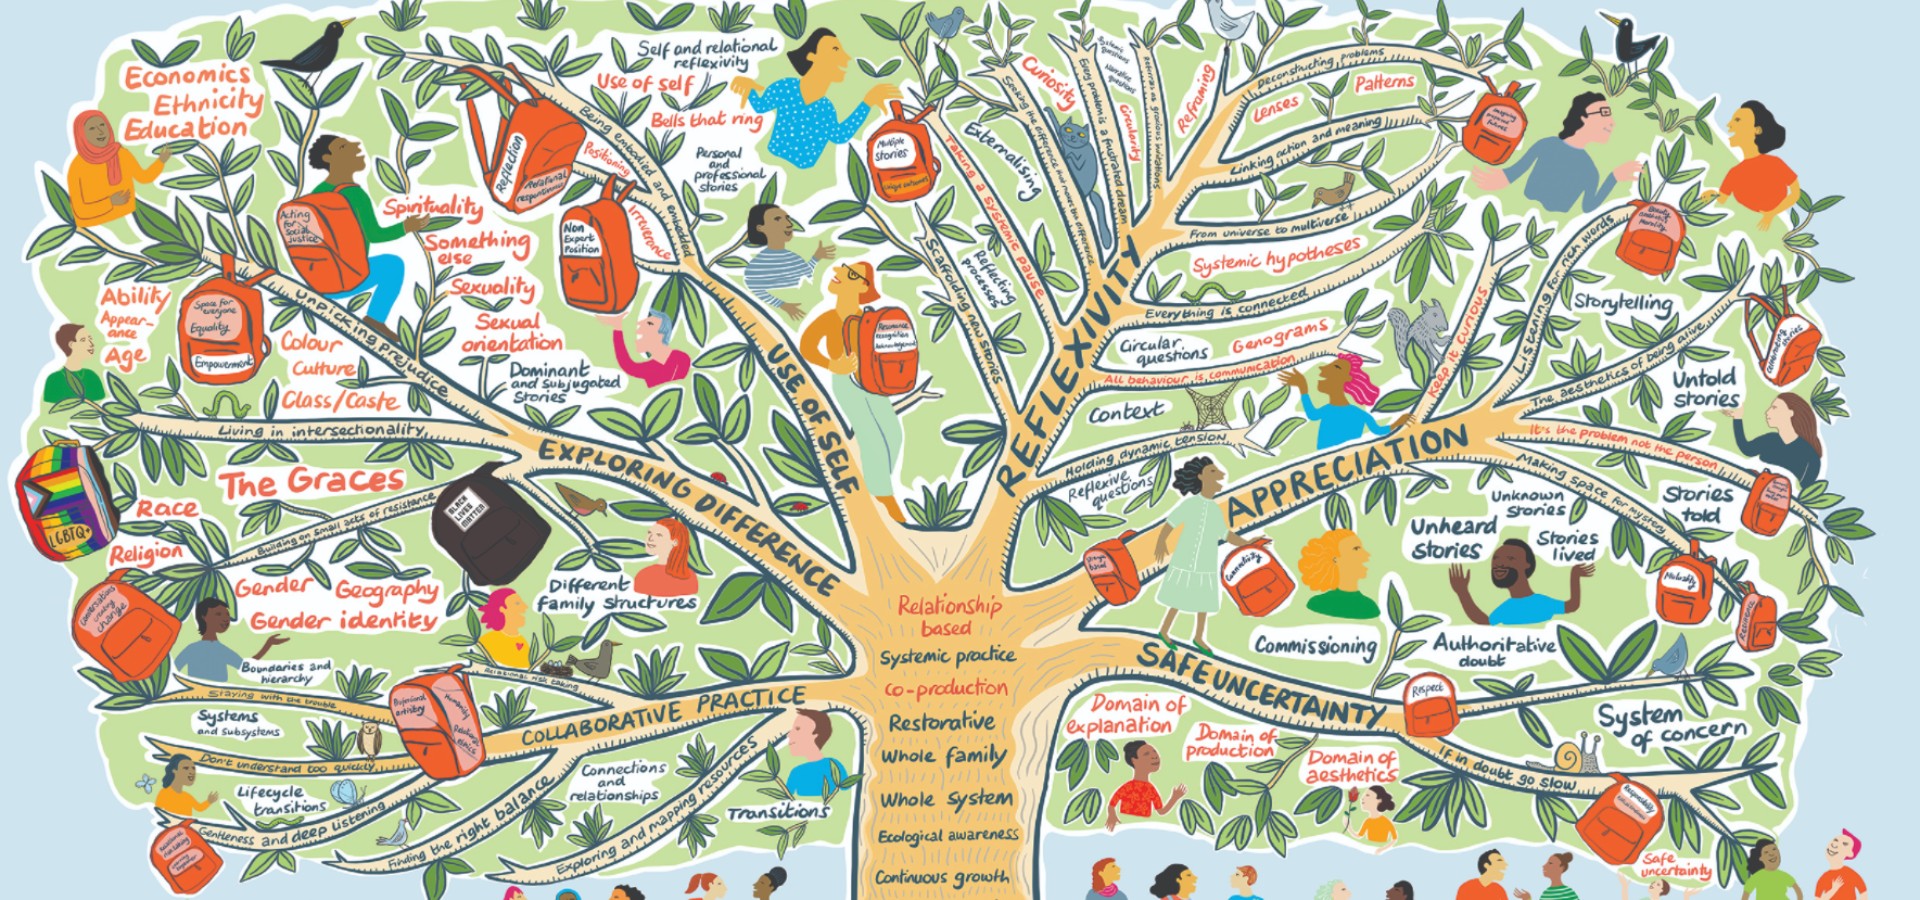 Camden model of social work tree of life